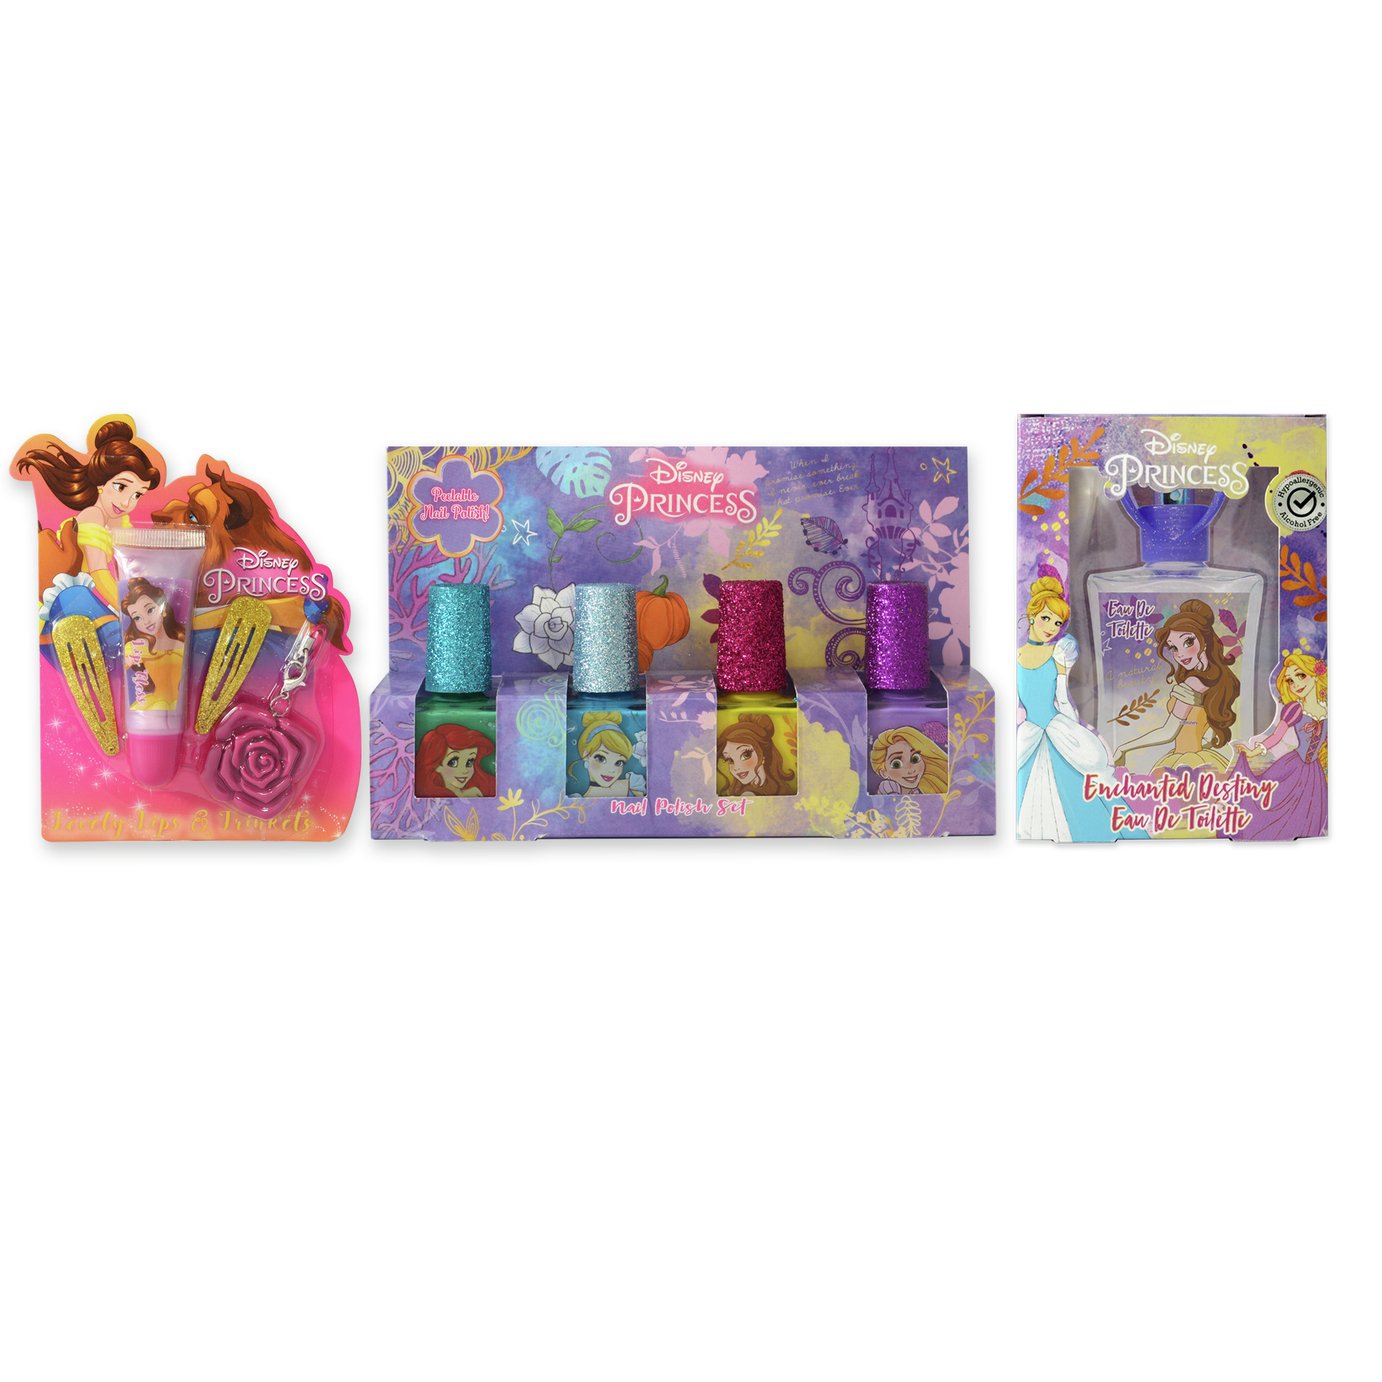 Disney Princess Enchanted Destiny Gift Set